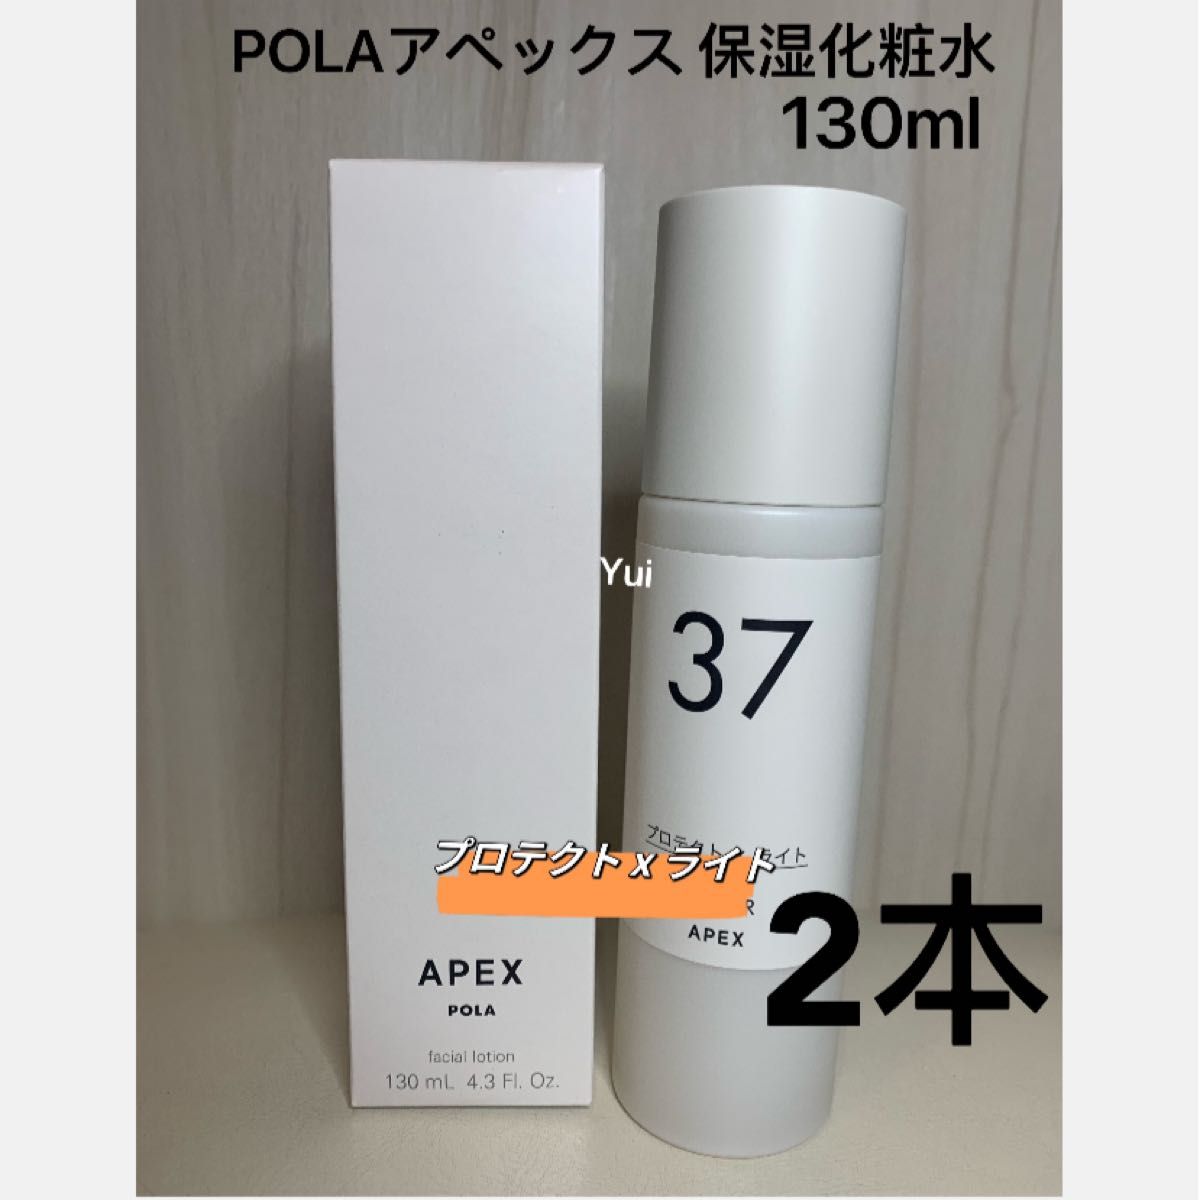 POLA ポーラ APEX 保湿化粧水 アペックス  130ml 【37番 プロテクトxライト】x2本